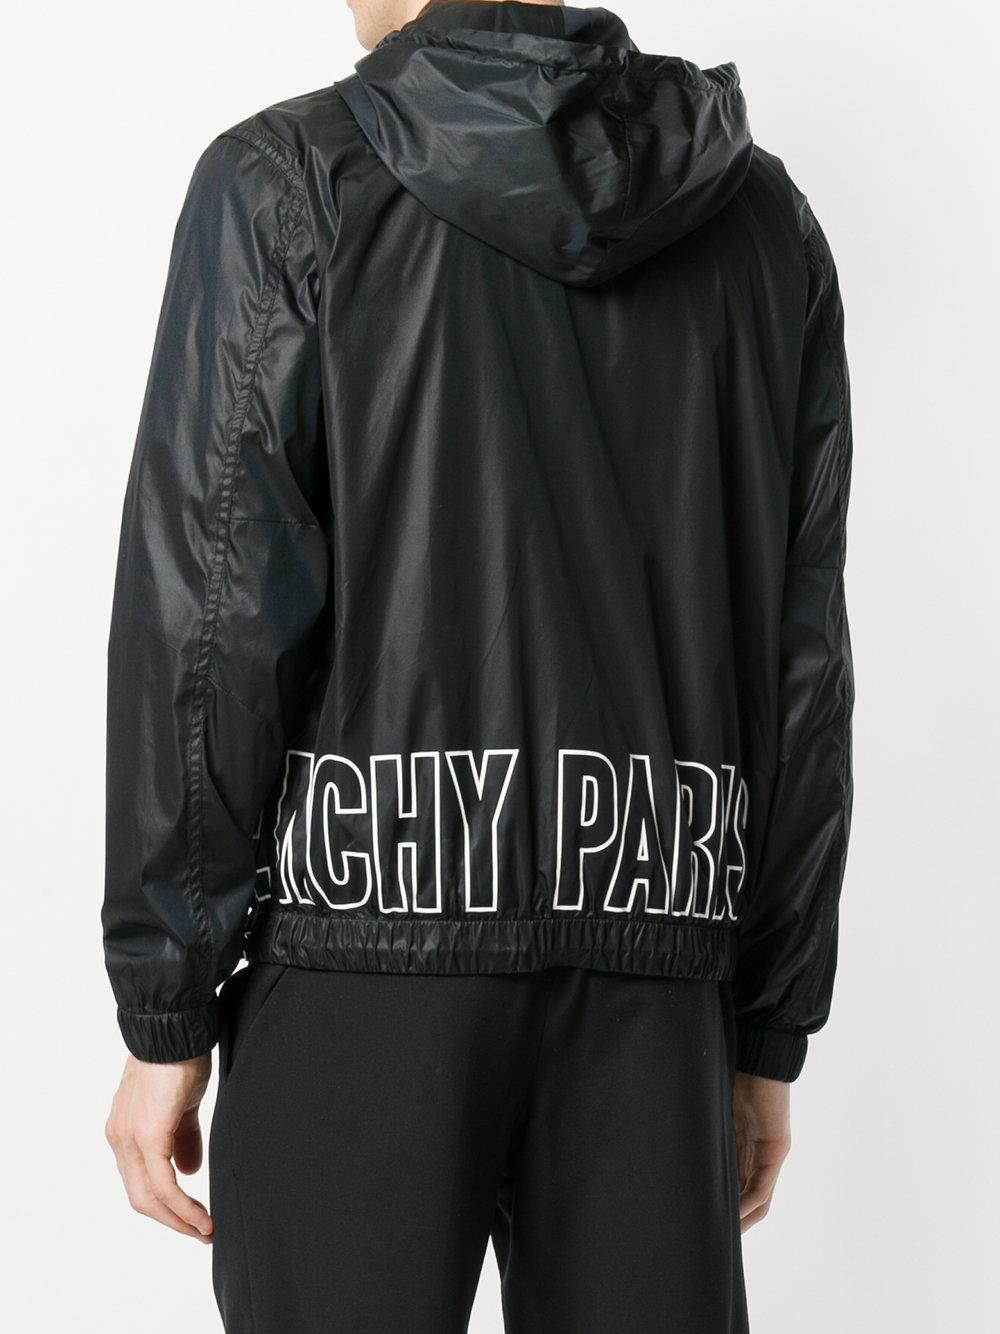 Givenchy Logo Print Windbreaker Jacket in Black for Men - Lyst